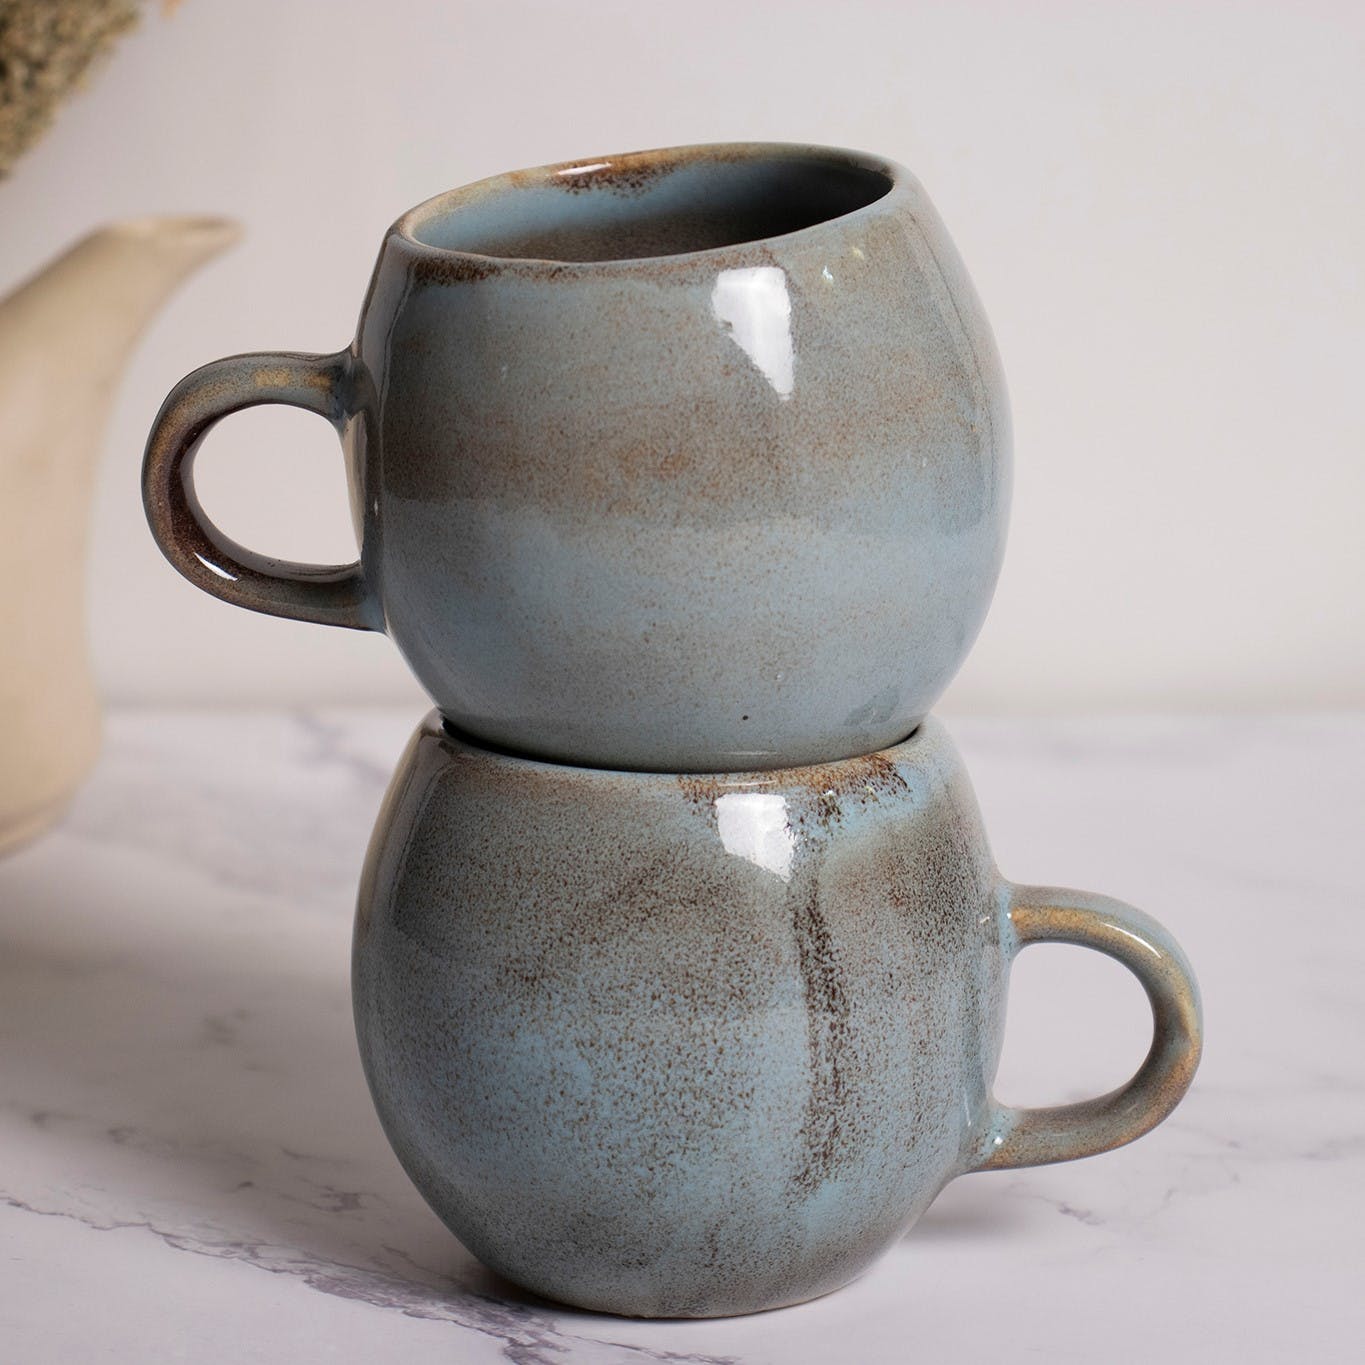 earthenware,Ceramic,Serveware,Pottery,Mug,Drinkware,Cup,Tableware,Jug,Cup